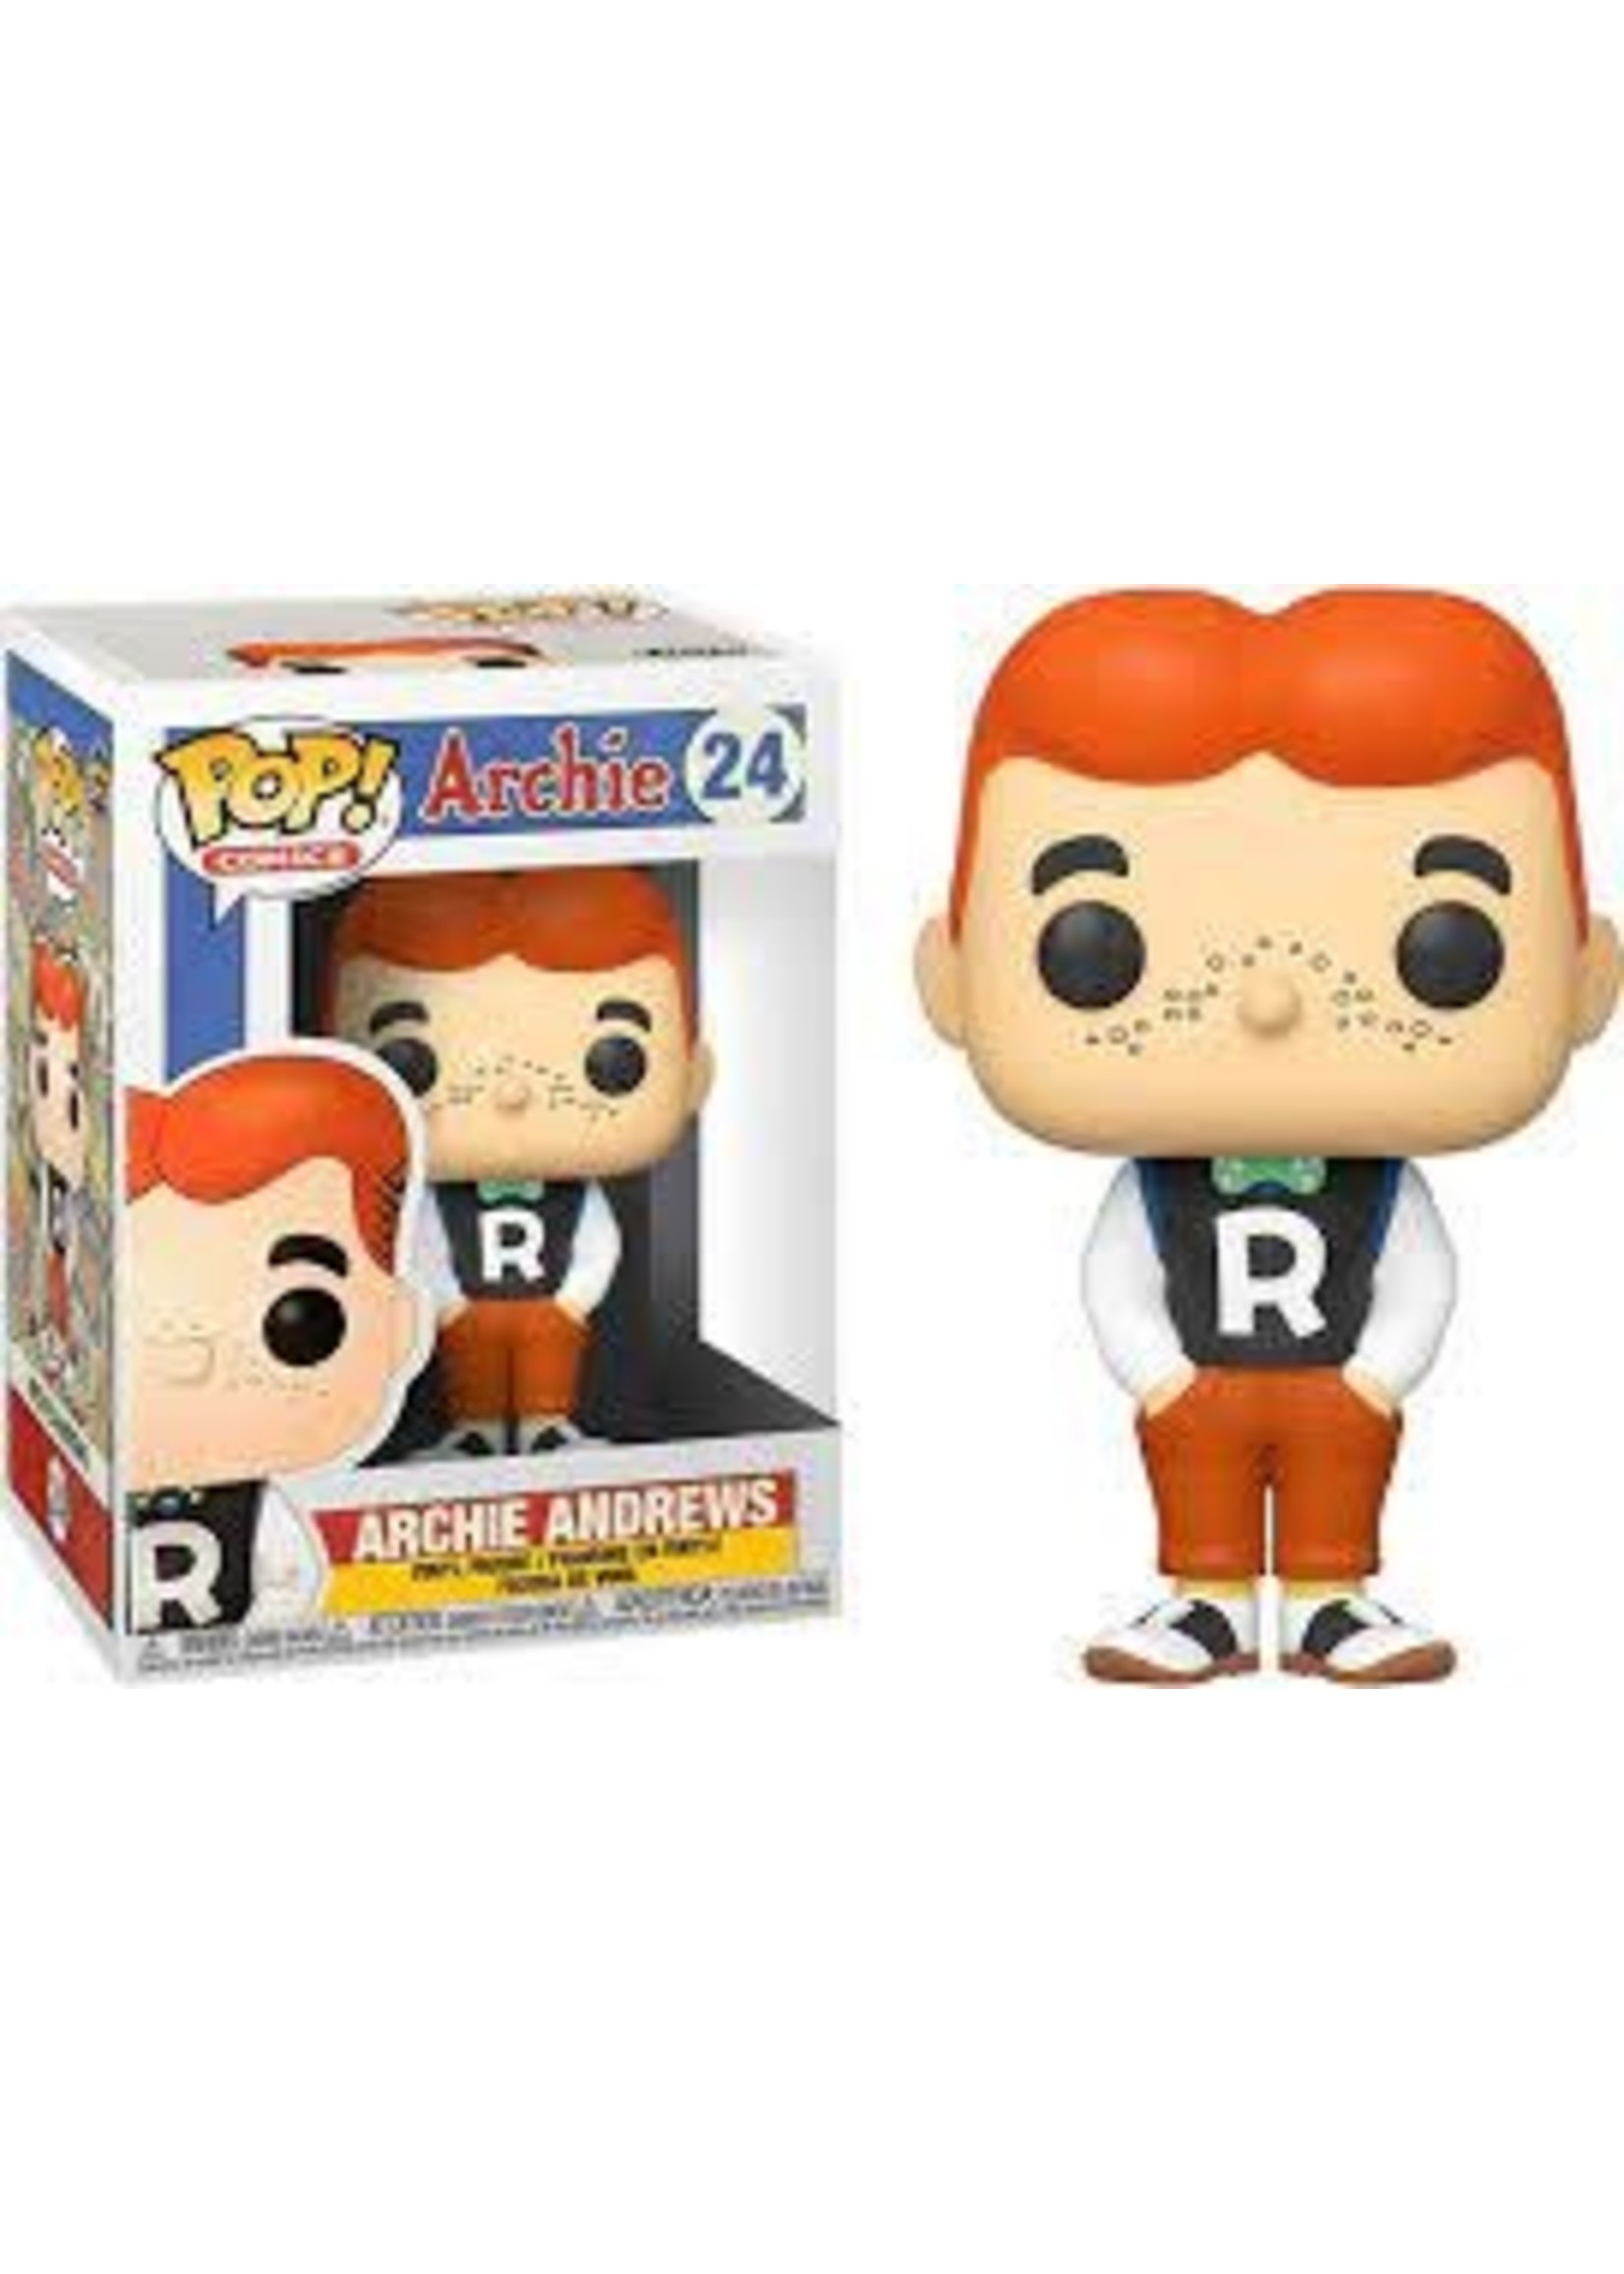 Funko Archie 24 Archie Andrews